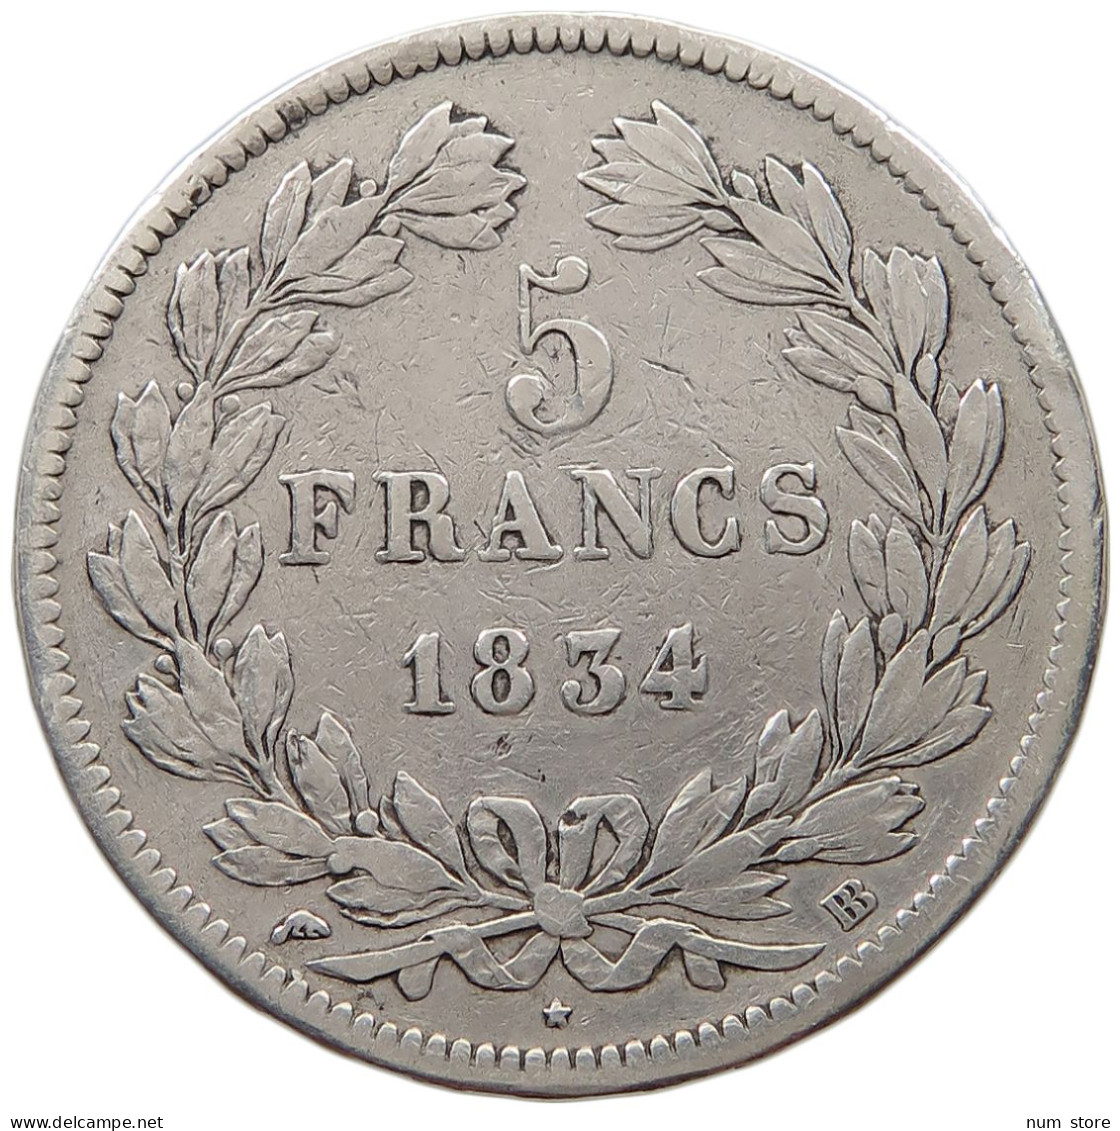 FRANCE 5 FRANCS 1834 BB LOUIS PHILIPPE I. (1830-1848) #a001 0105 - 5 Francs